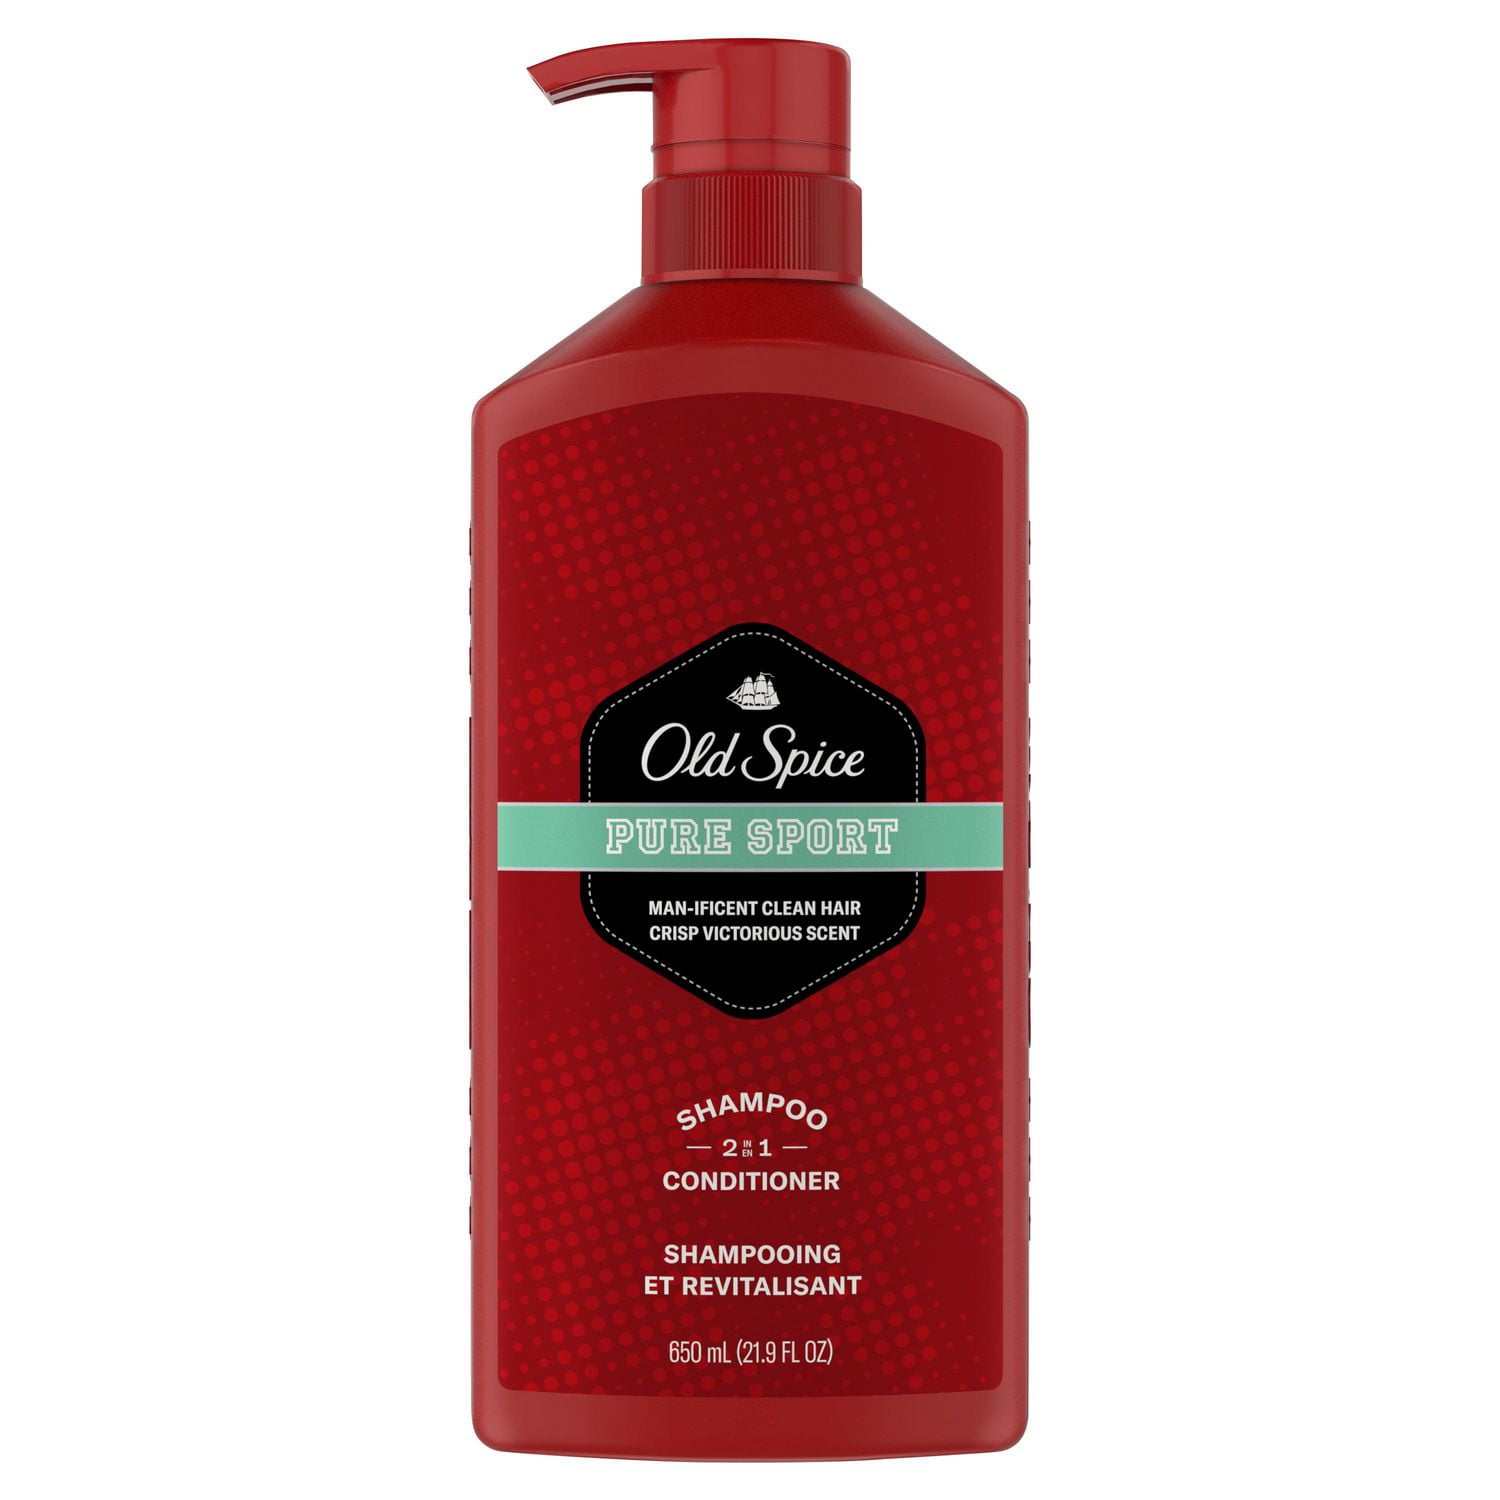 Old Spice Shampoo + Conditioner - Swagger - Shop Shampoo